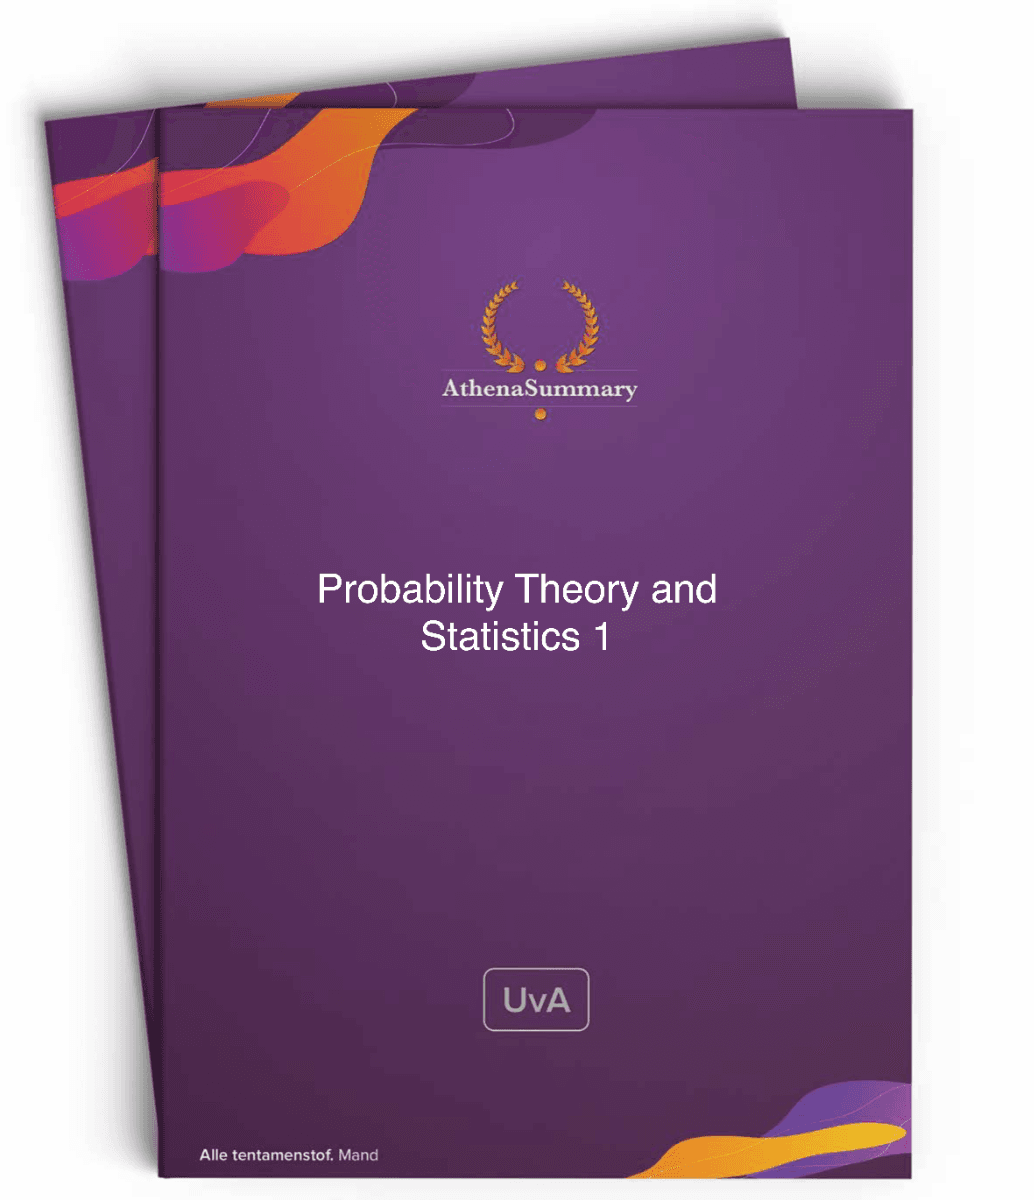 Literature Summary: Probability Theory and Statistics 1